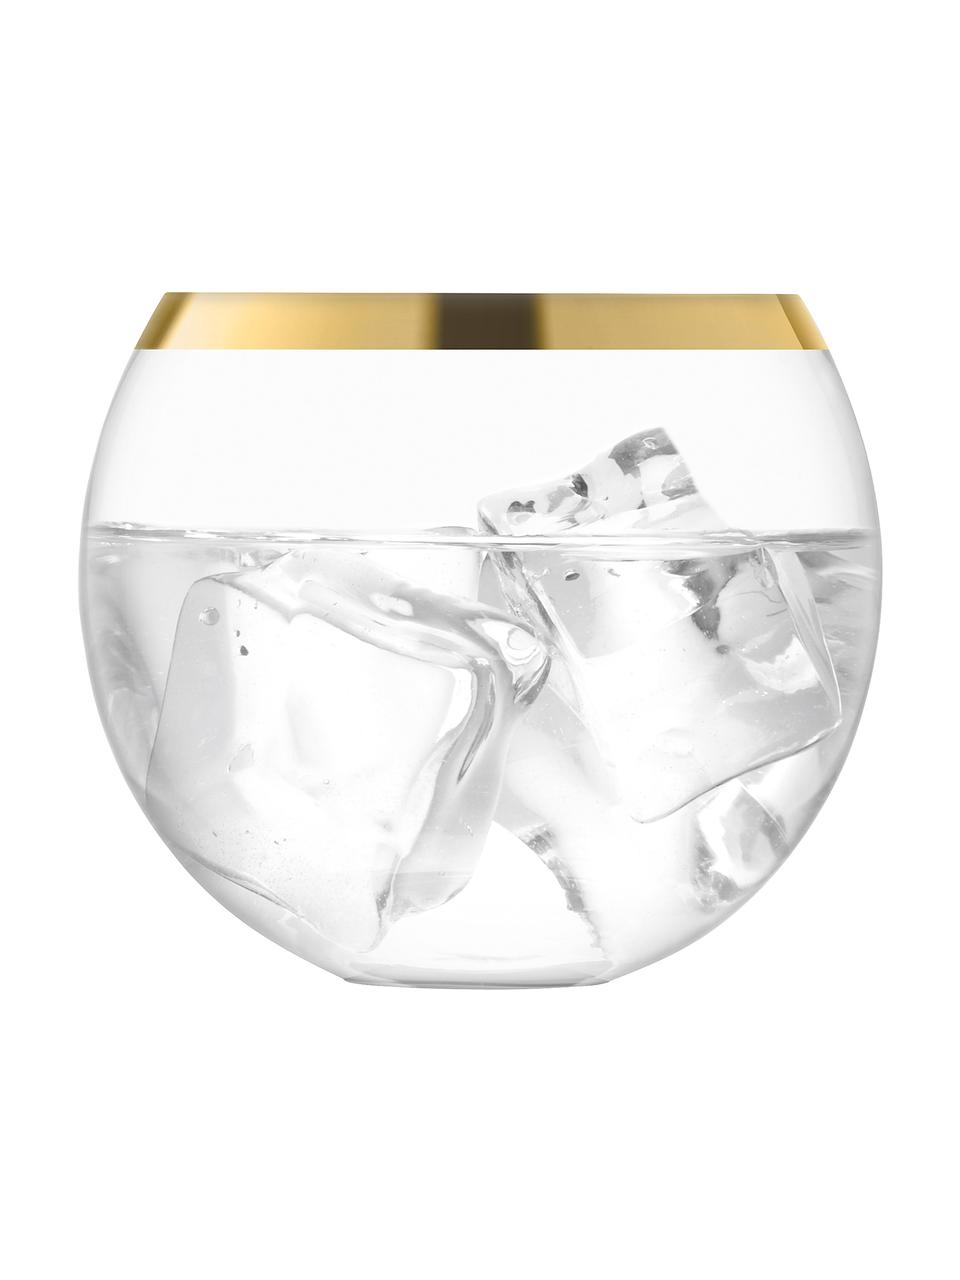 Mondgeblazen cocktailglazen Luca met goudkleurige rand, 2 stuks, Glas, Transparant, goudkleurig, Ø 9 x H 8 cm, 330 ml